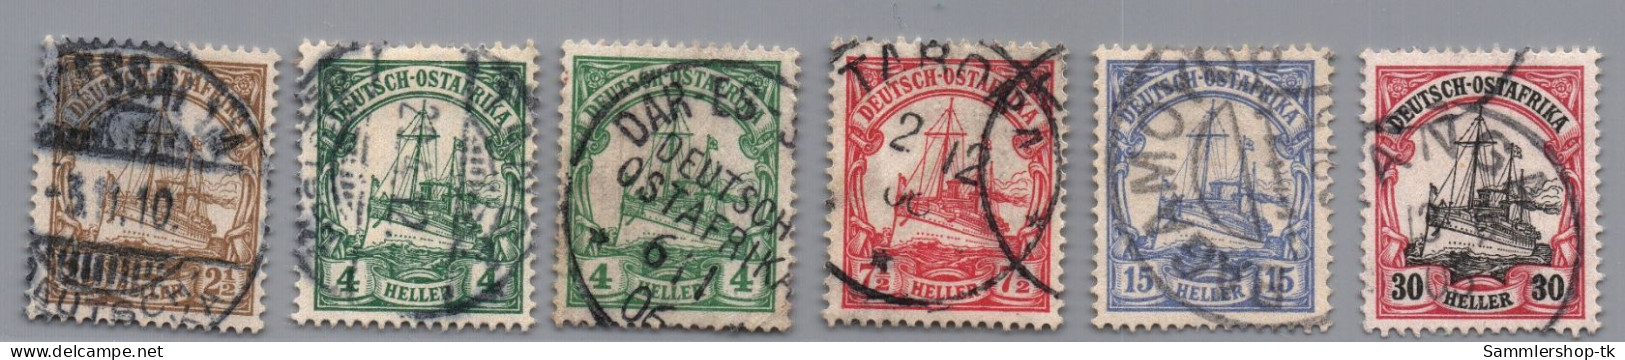 Deutsche Kolonien Dt. Ostafrika Michel Nr. 22 - 27 Gestempelt - German East Africa